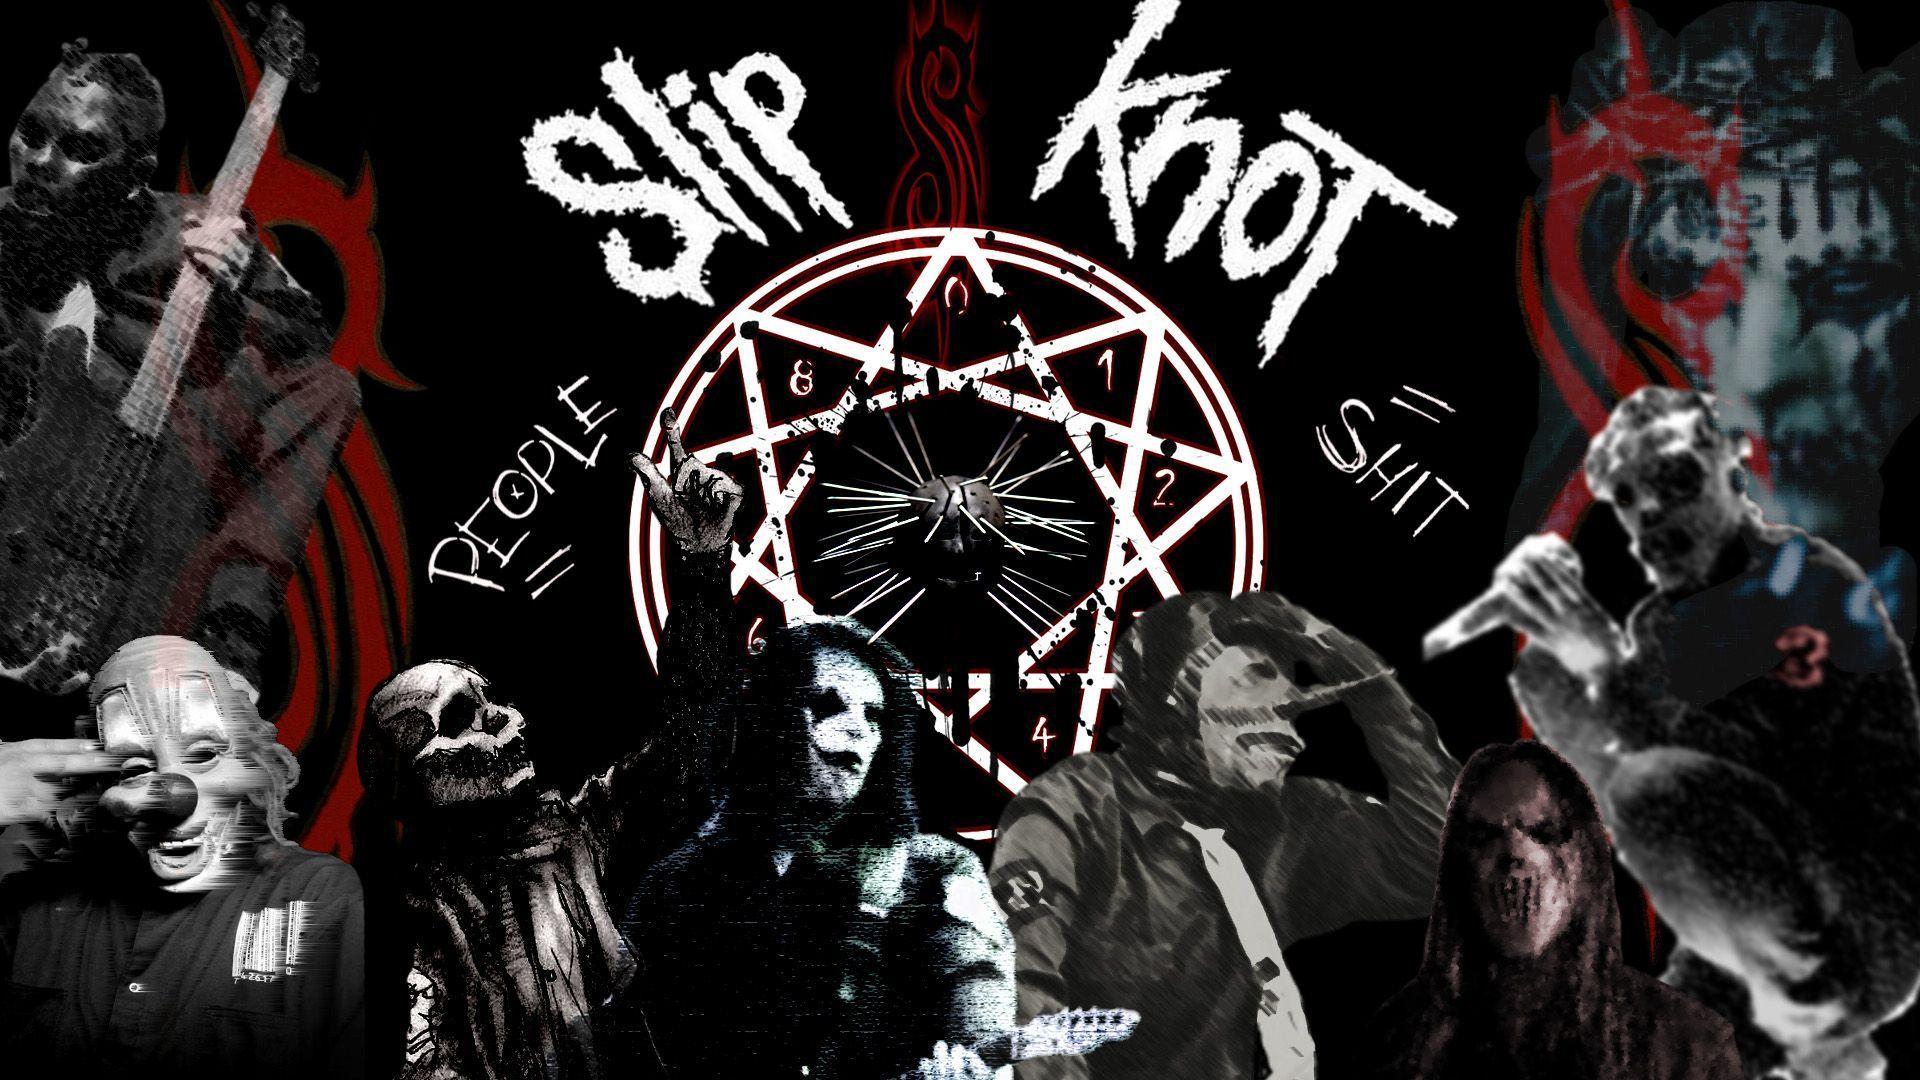 Awesome Slipknot Image Collection: Slipknot Wallpaper download